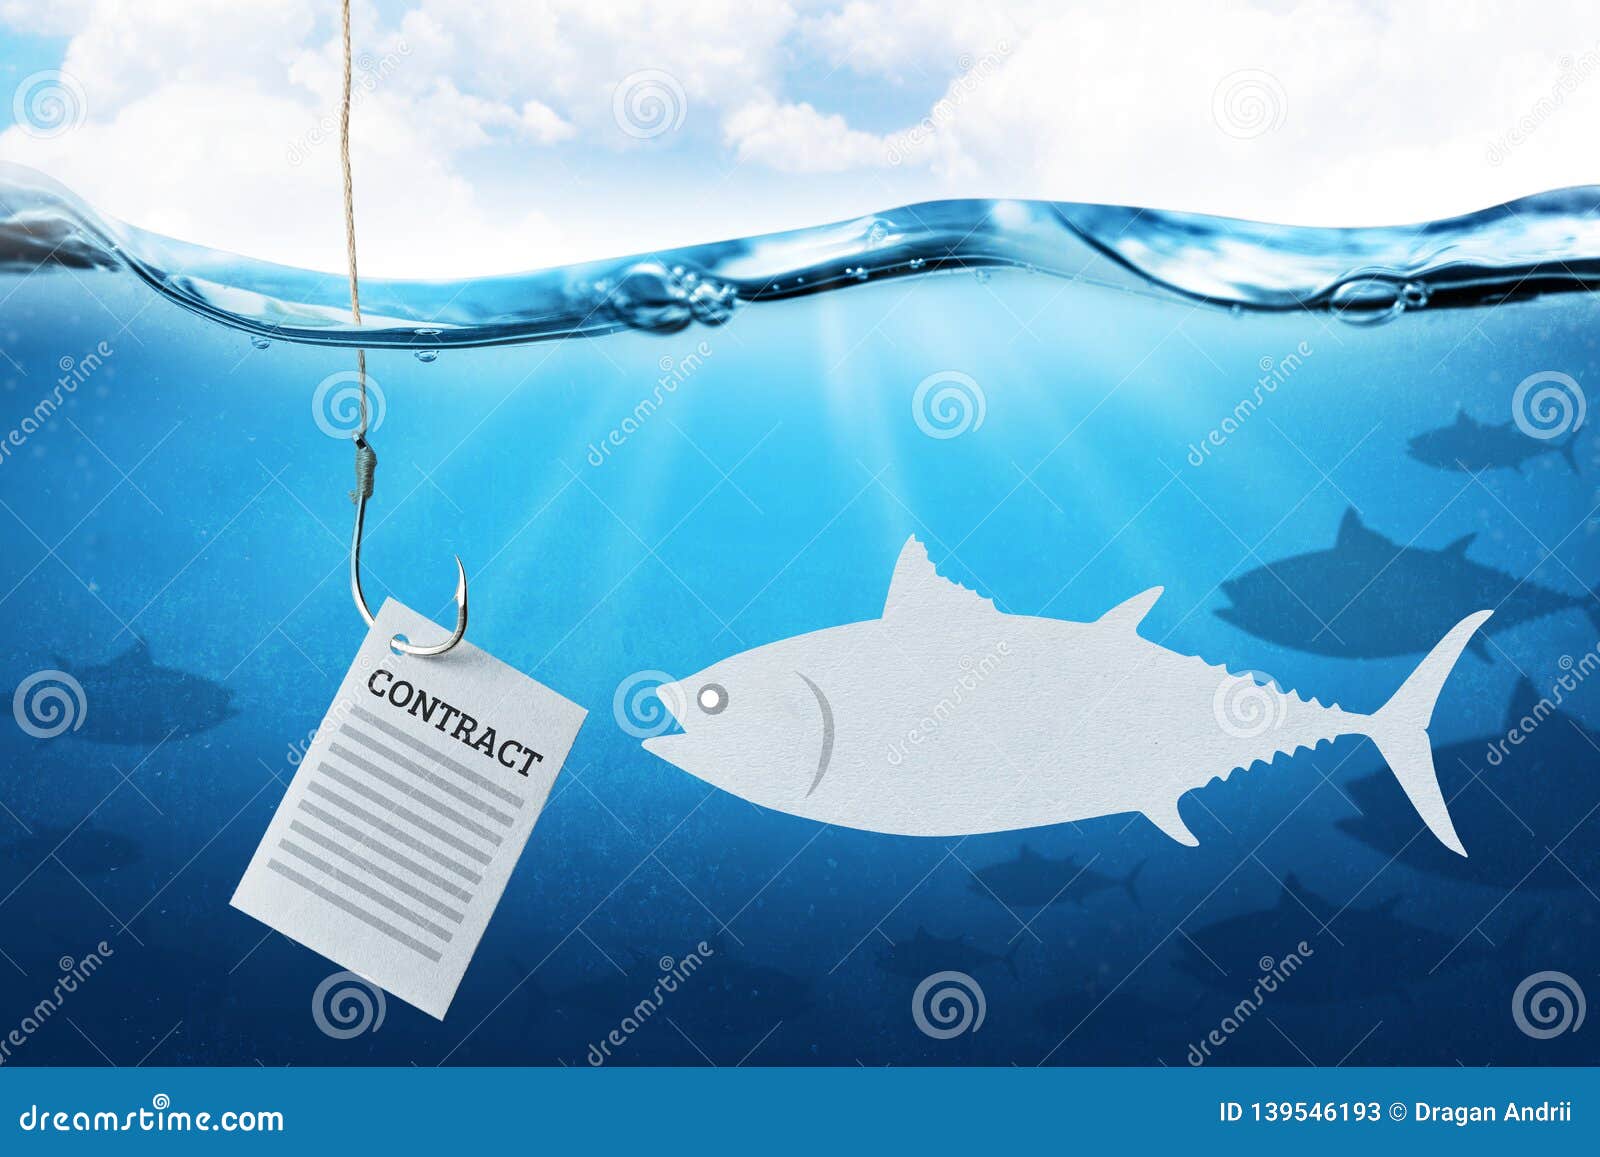 https://thumbs.dreamstime.com/z/contract-as-bait-fish-hook-underwater-139546193.jpg